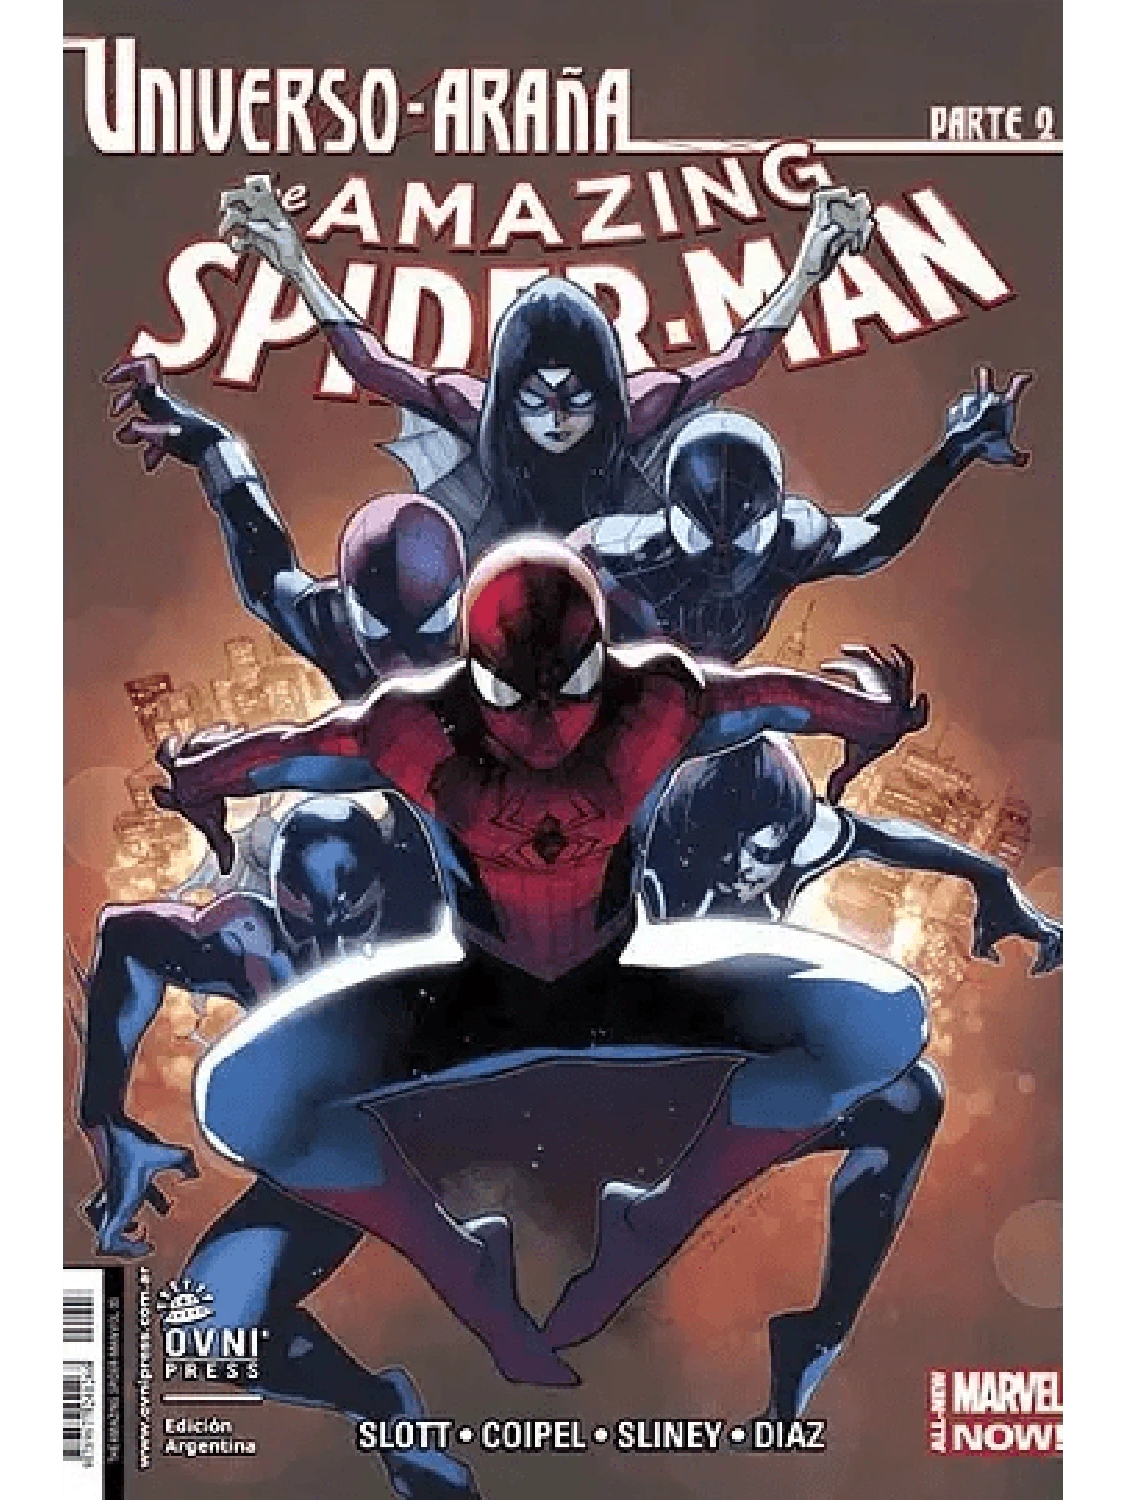 The Amazing Spider-Man: Universo Araña Parte 2 OVNI Press ENcuadrocomics